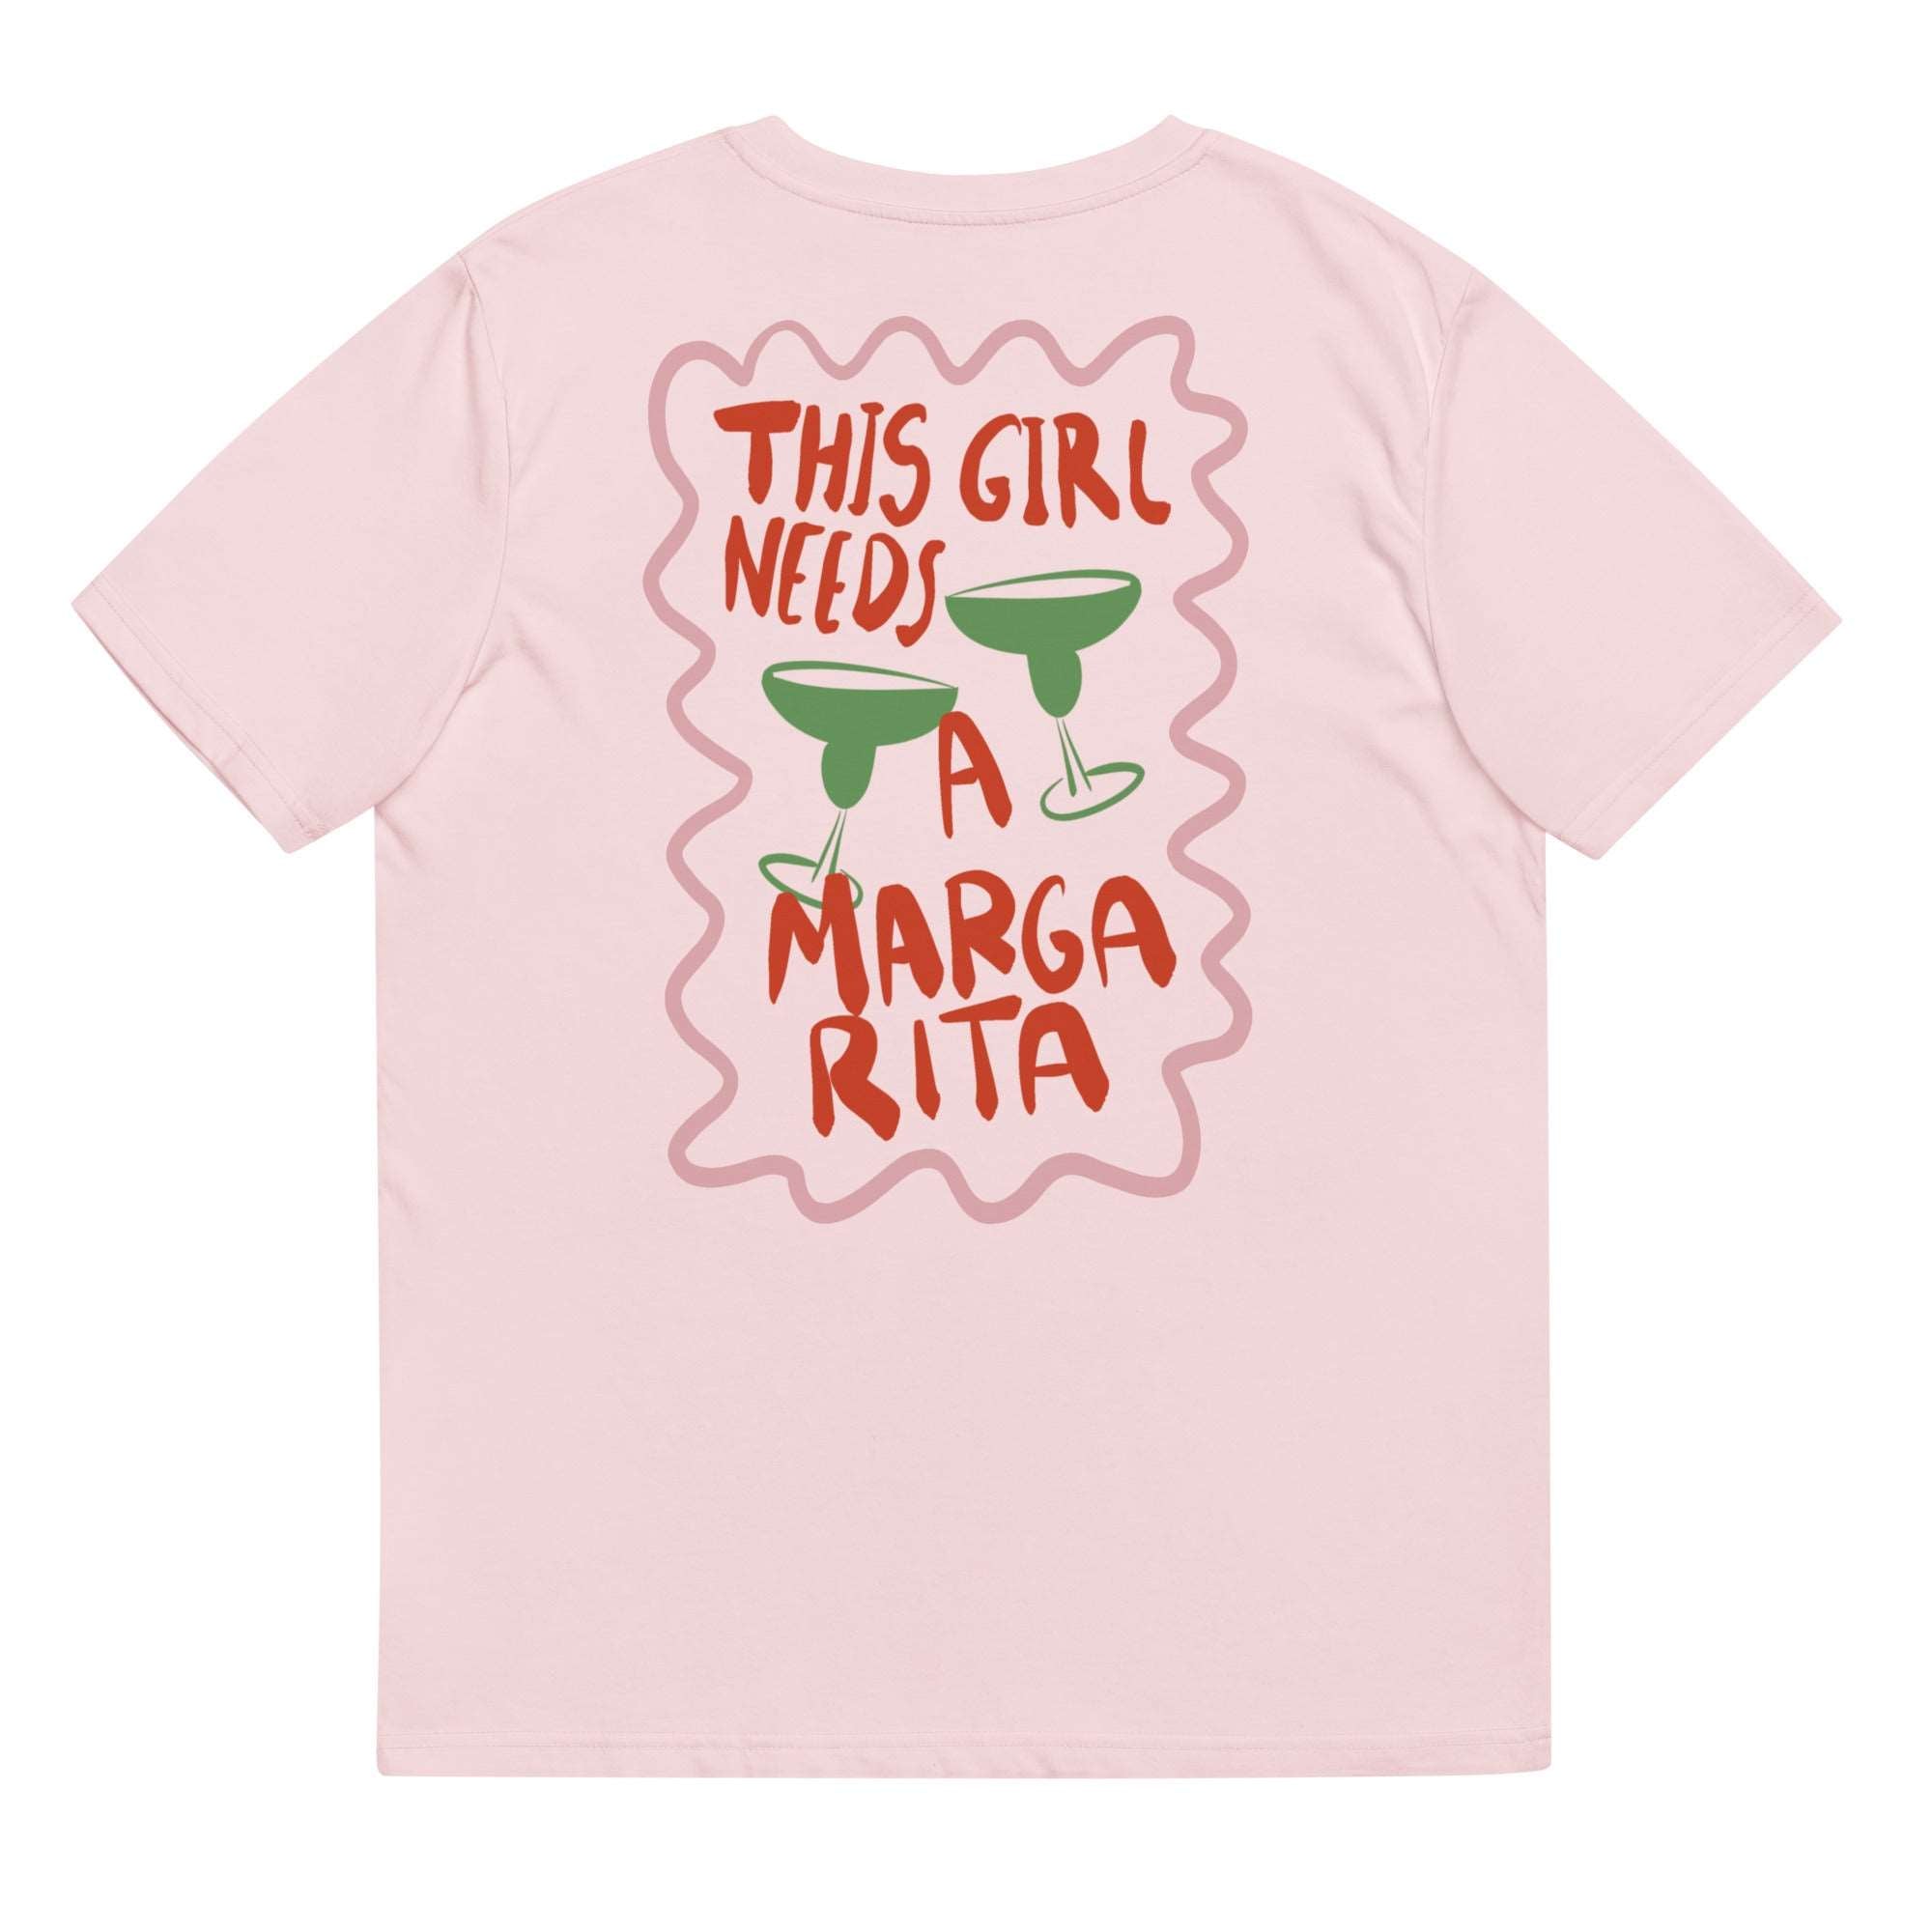 This Girl needs a Margarita - Organic T-shirt